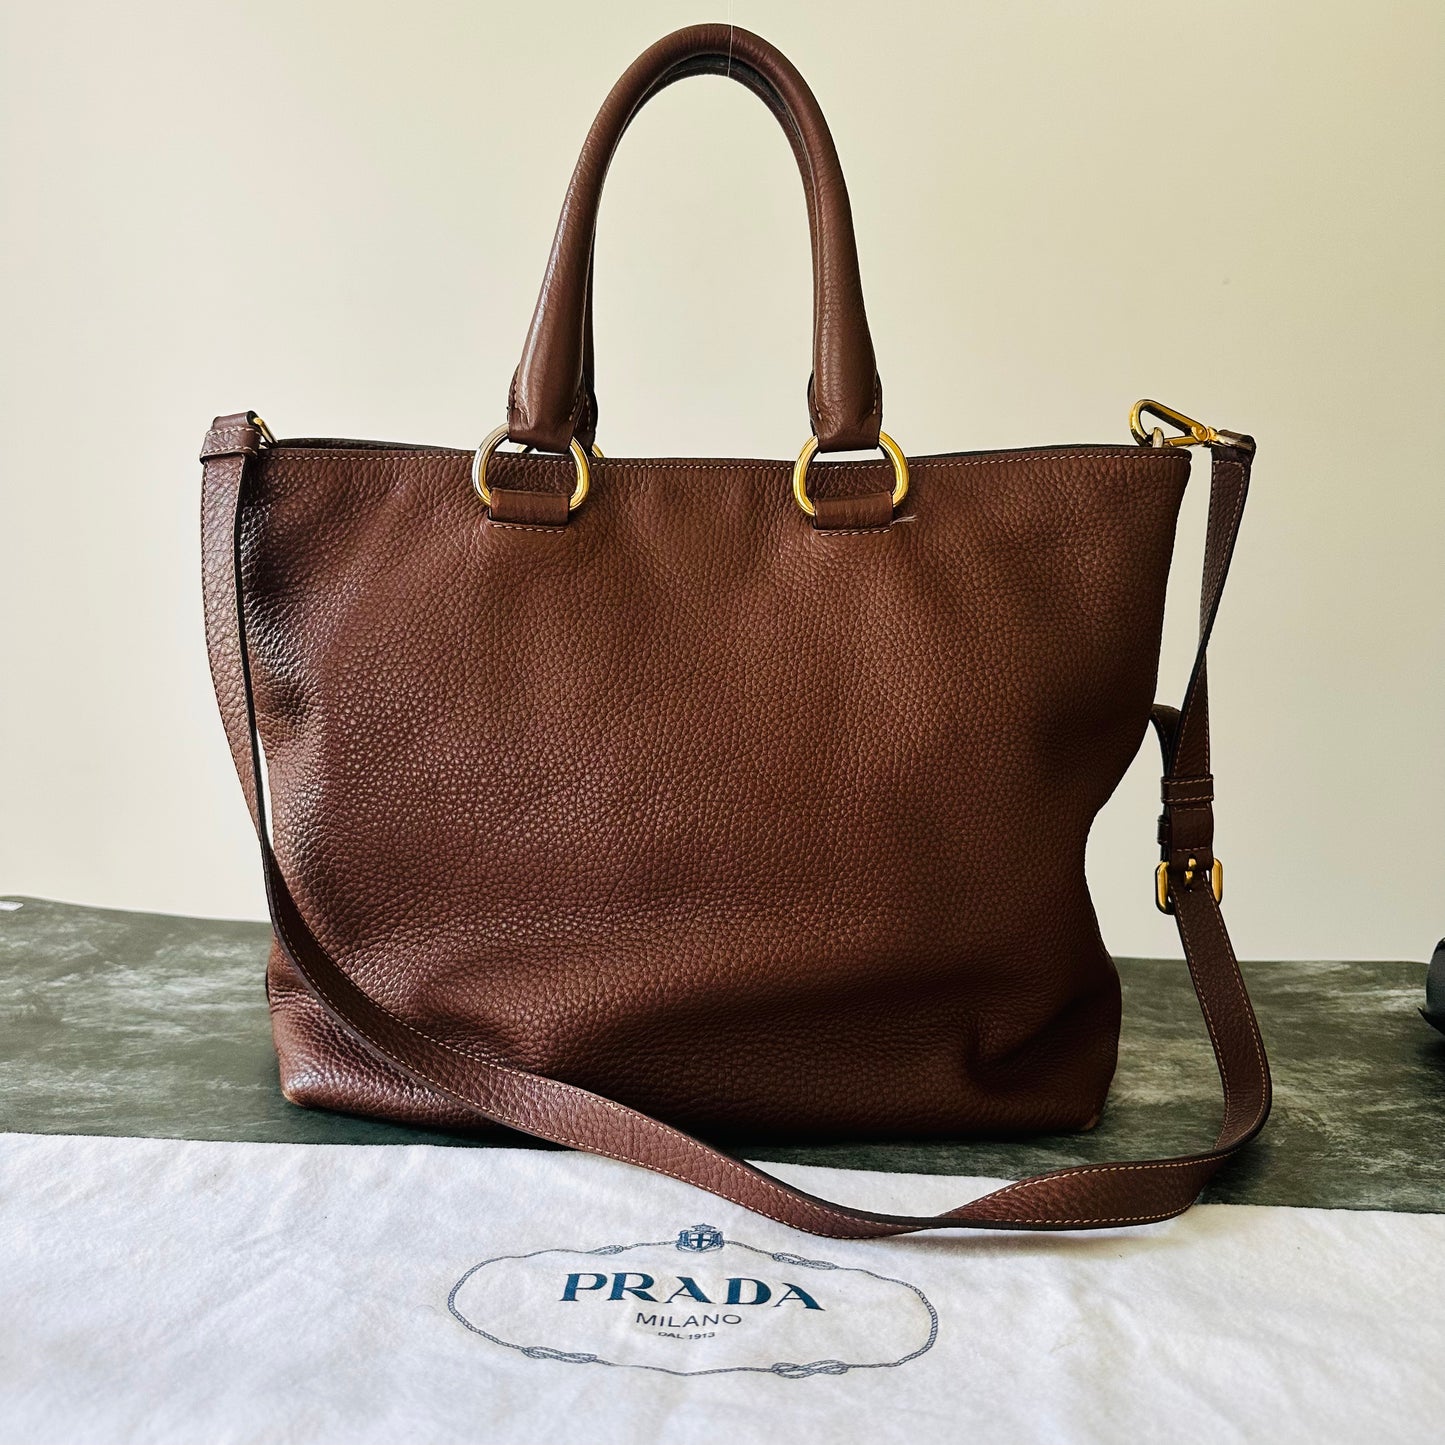 Prada Vitello Daino Satchel Bag in Brown Leather